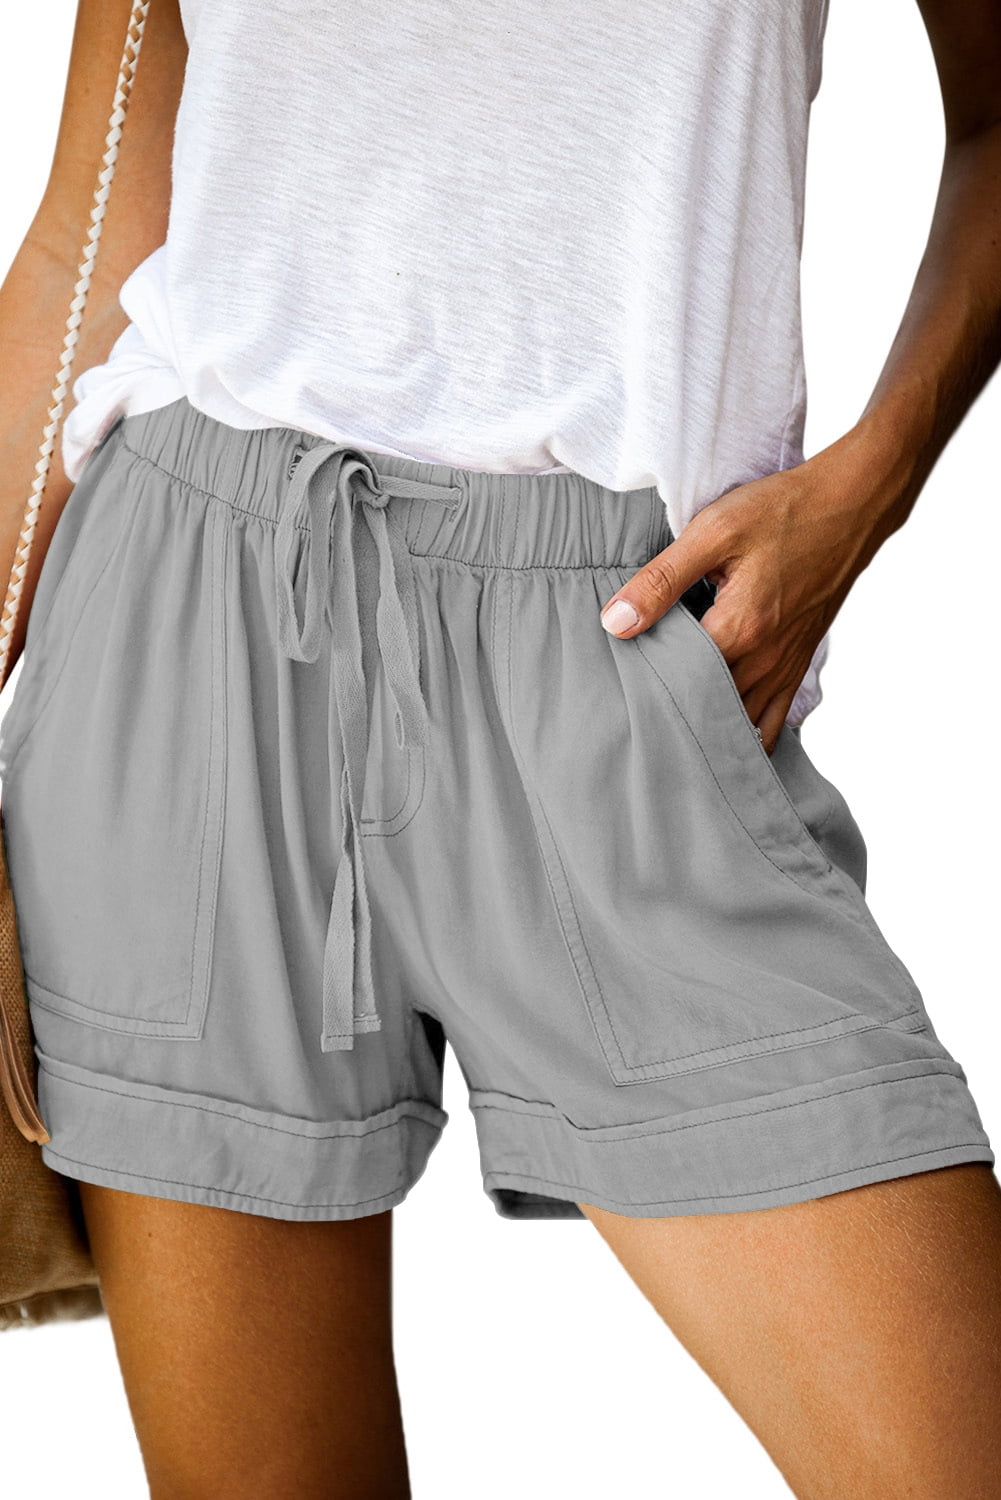 KISSMODA Women's Shorts for Summer Drawstring Elastic Waist Cotton Causal  Shorts Pant 